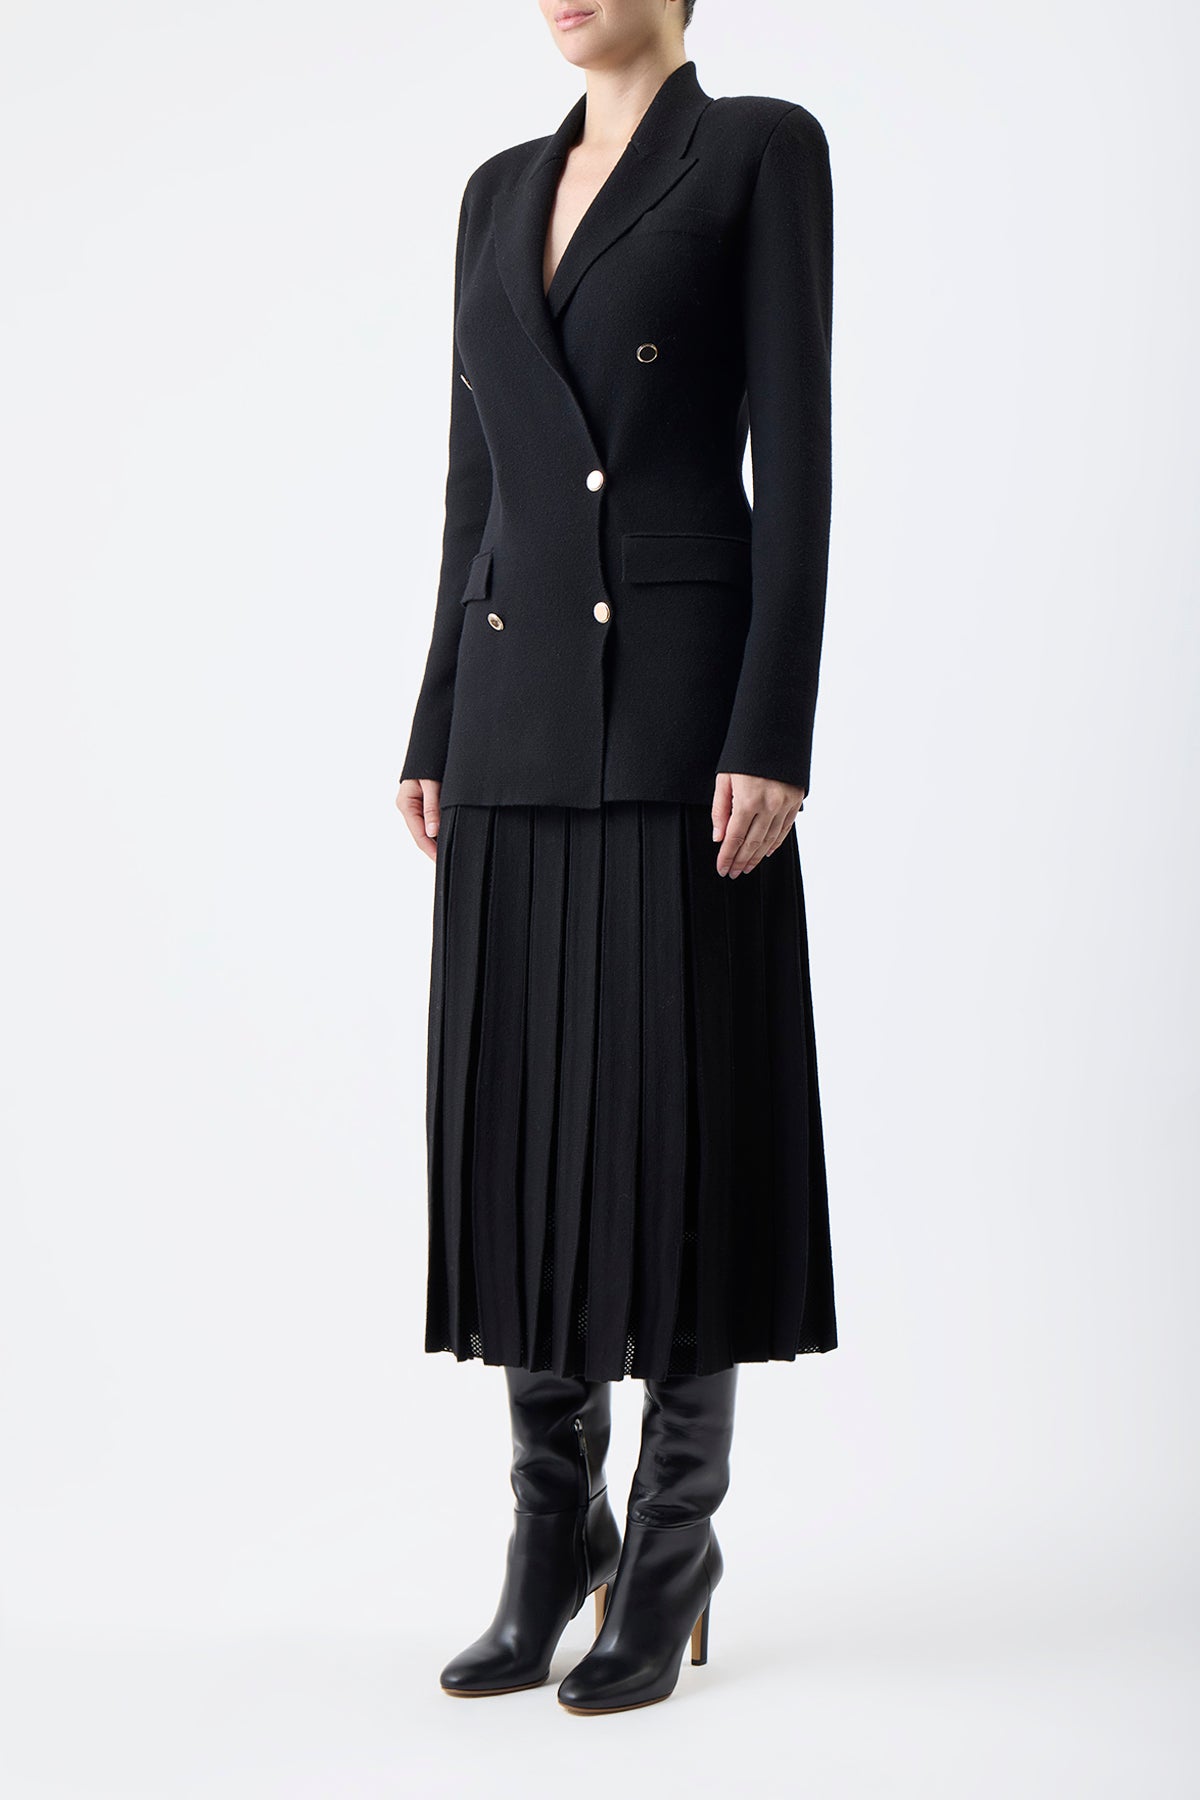 Del Knit Pleated Skirt in Black Wool